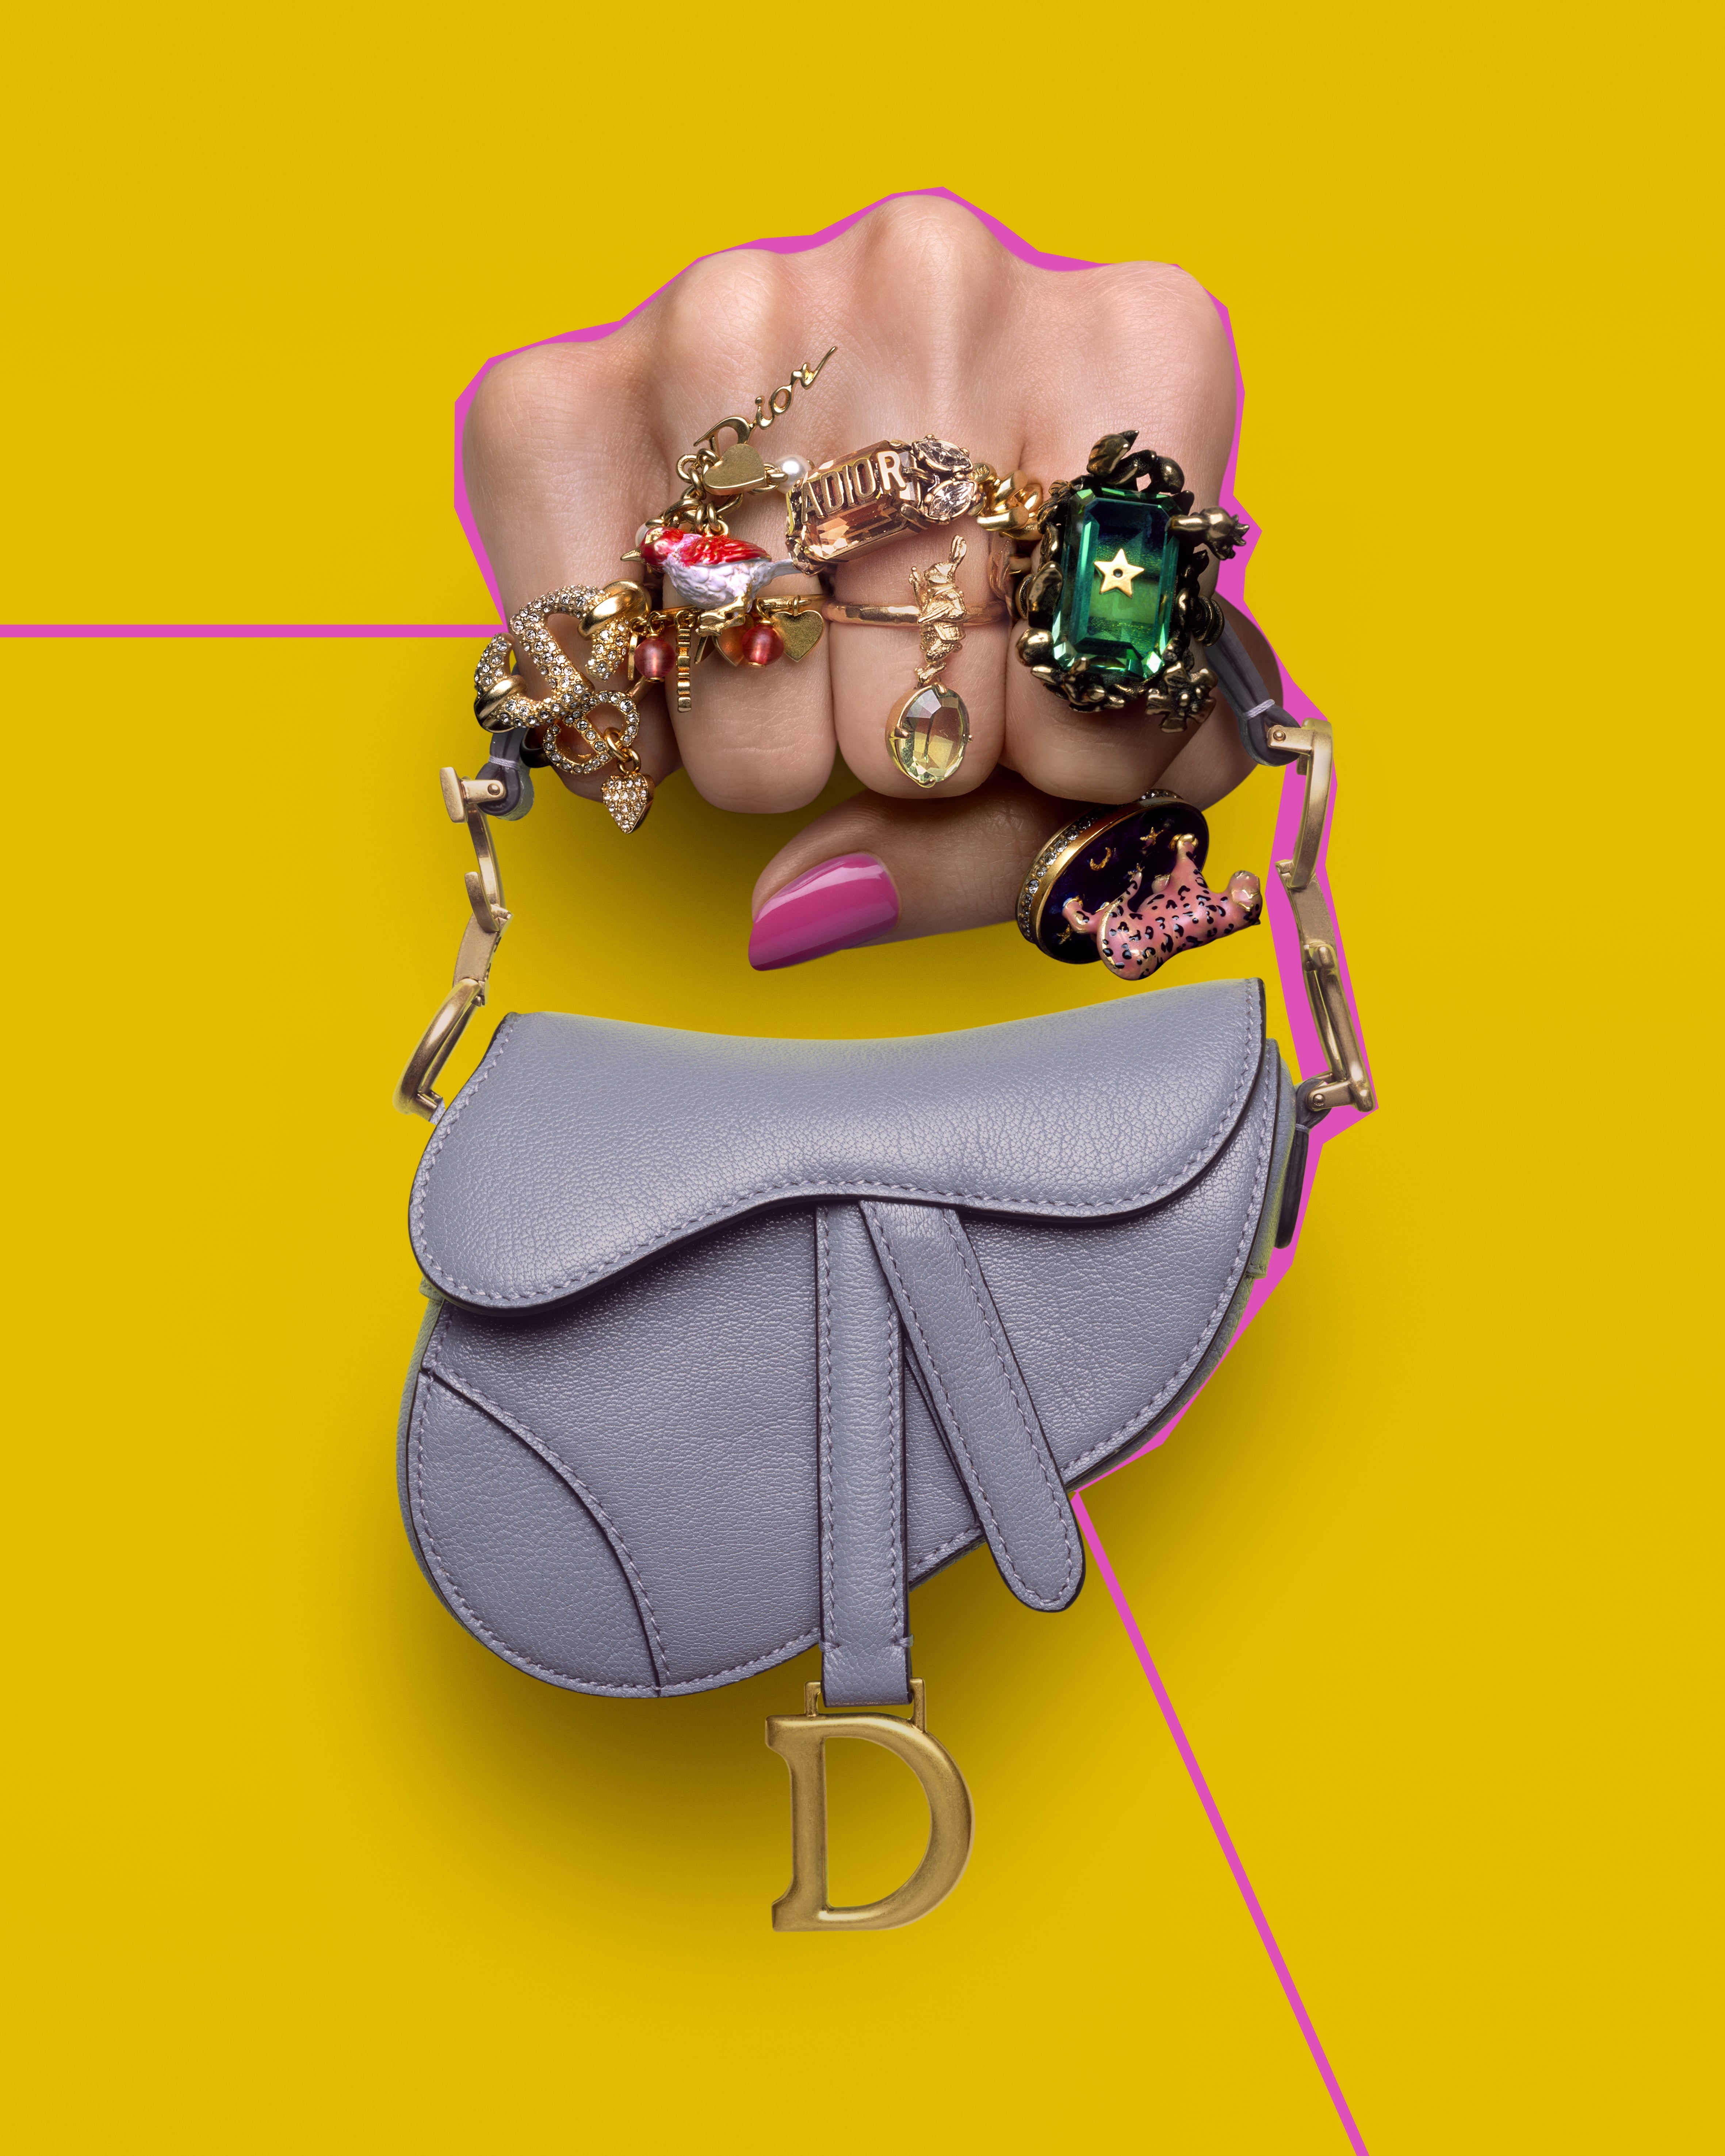 Dior Saddle Bag Review + Size/Price Comparison 